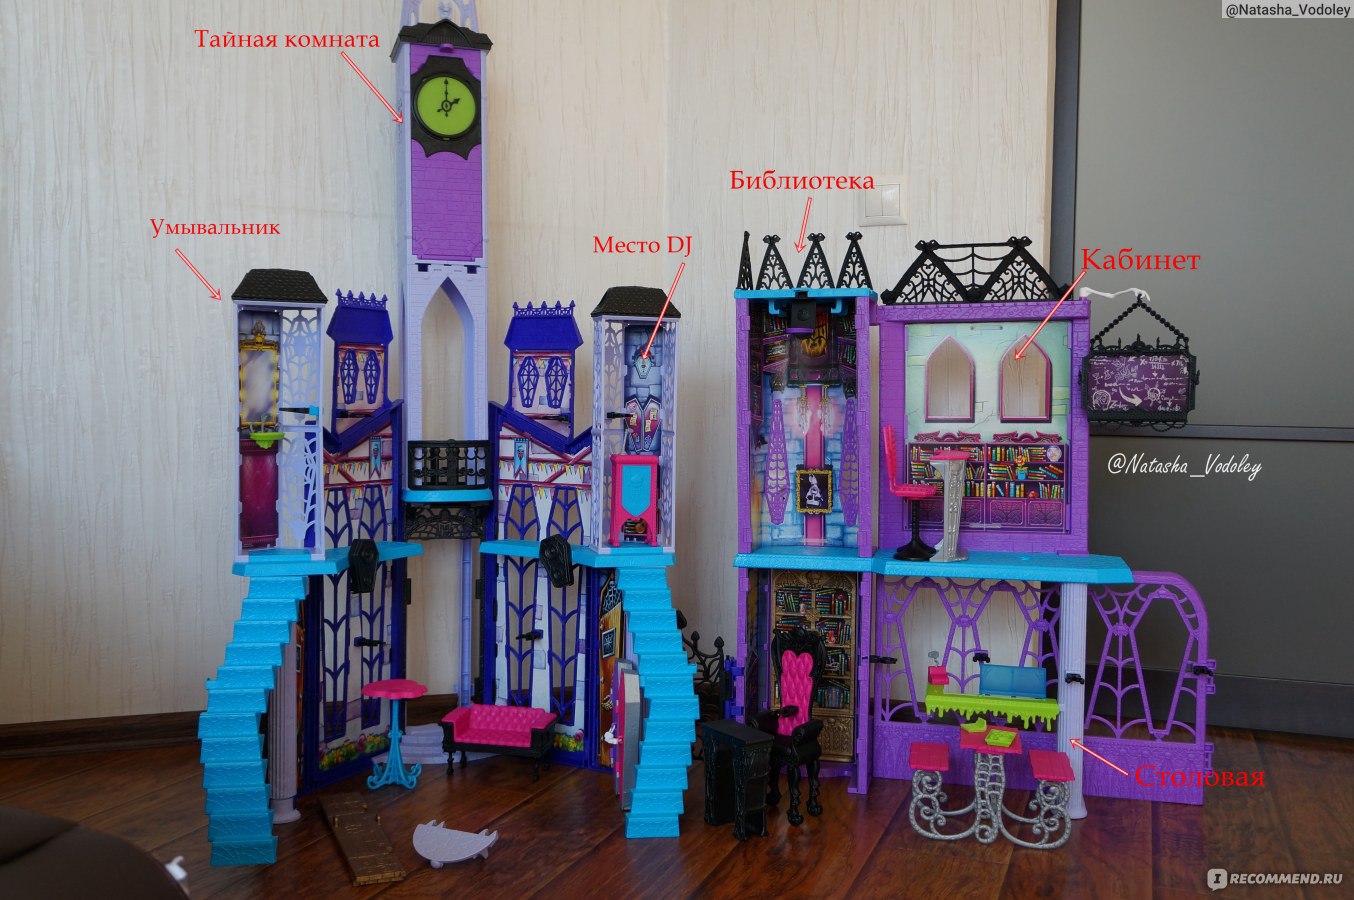 Кукольный домик Монстр Хай Monster High 66901 3 комнаты + балкон, 100 см!!!